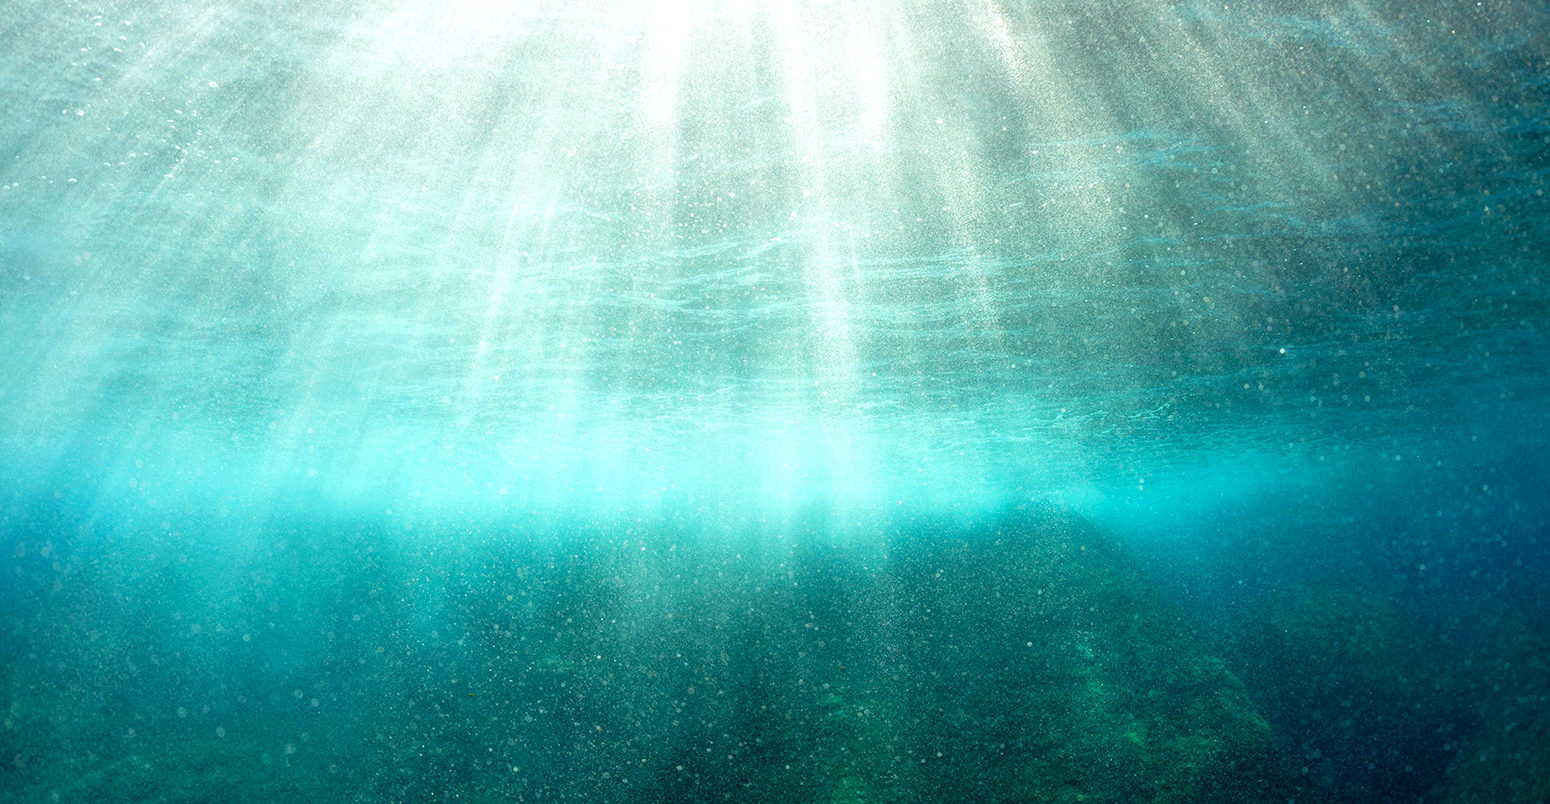 Sunrays penetrating water's surface, Port-Cros island, France. Credit: Sami Sarkis / Alamy Stock Photo.CE9ENH